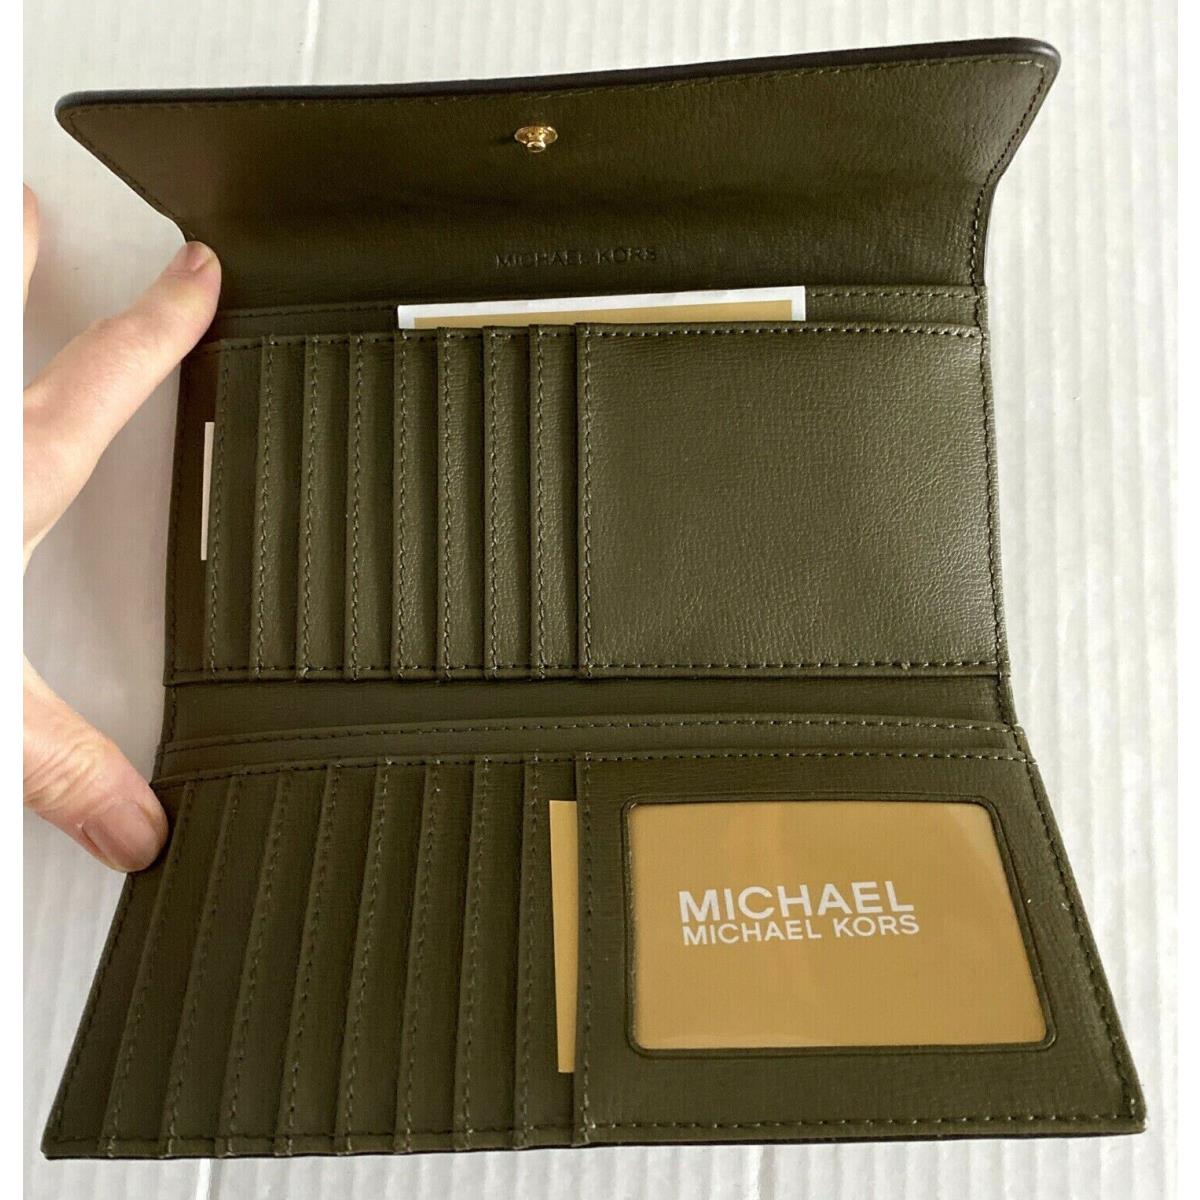 Michael Kors wallet  - Duffle